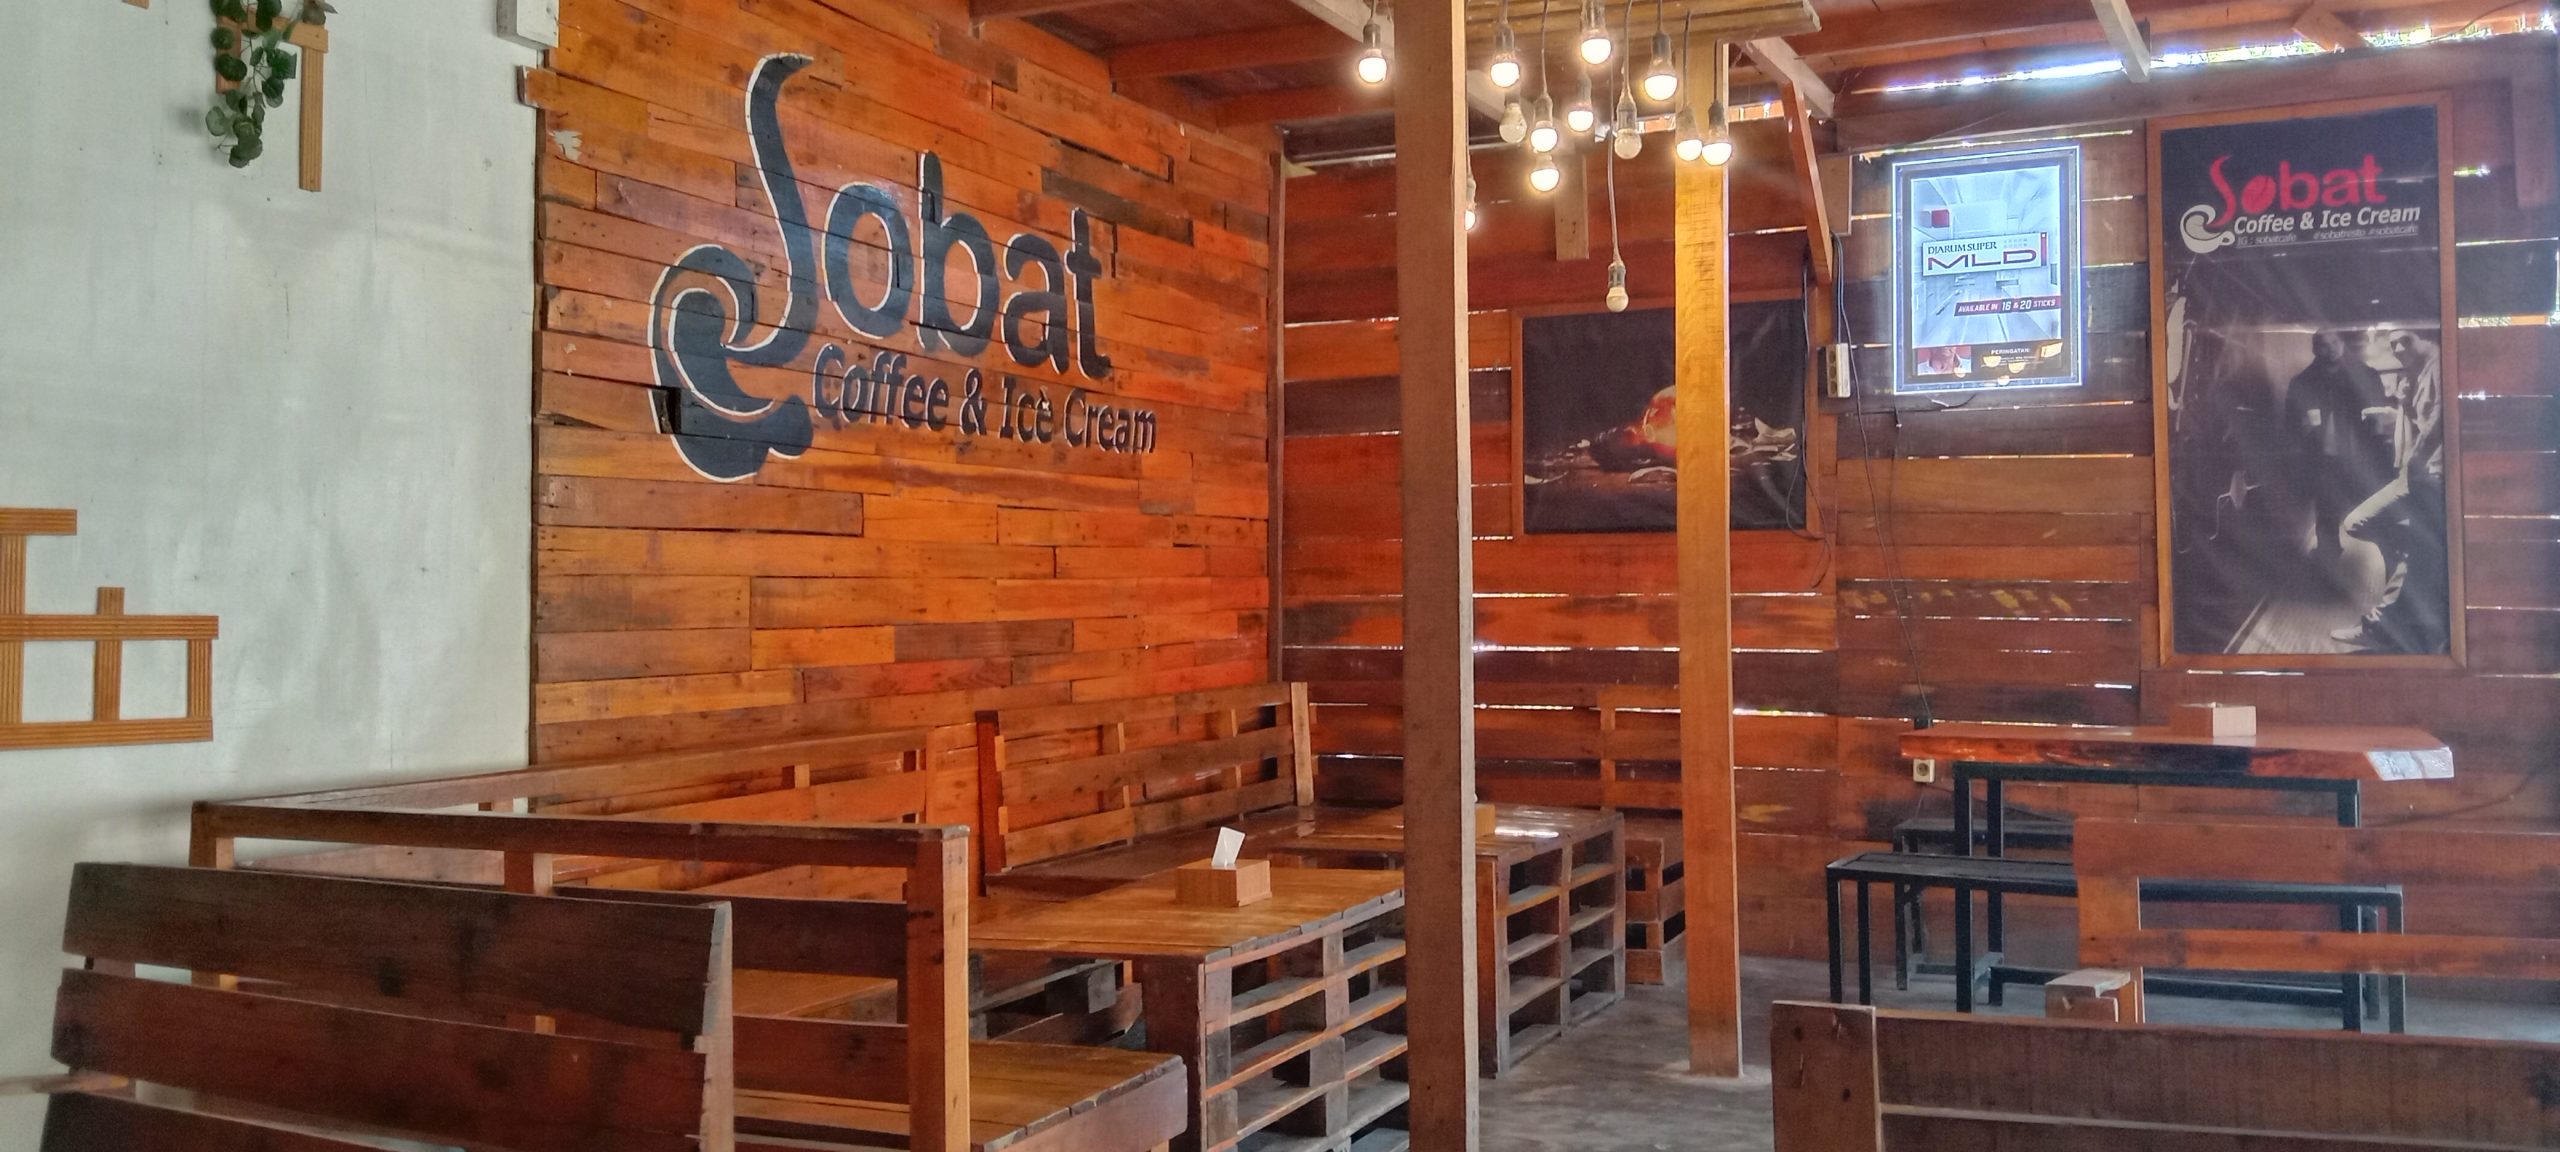 Sobat Coffee And Resto